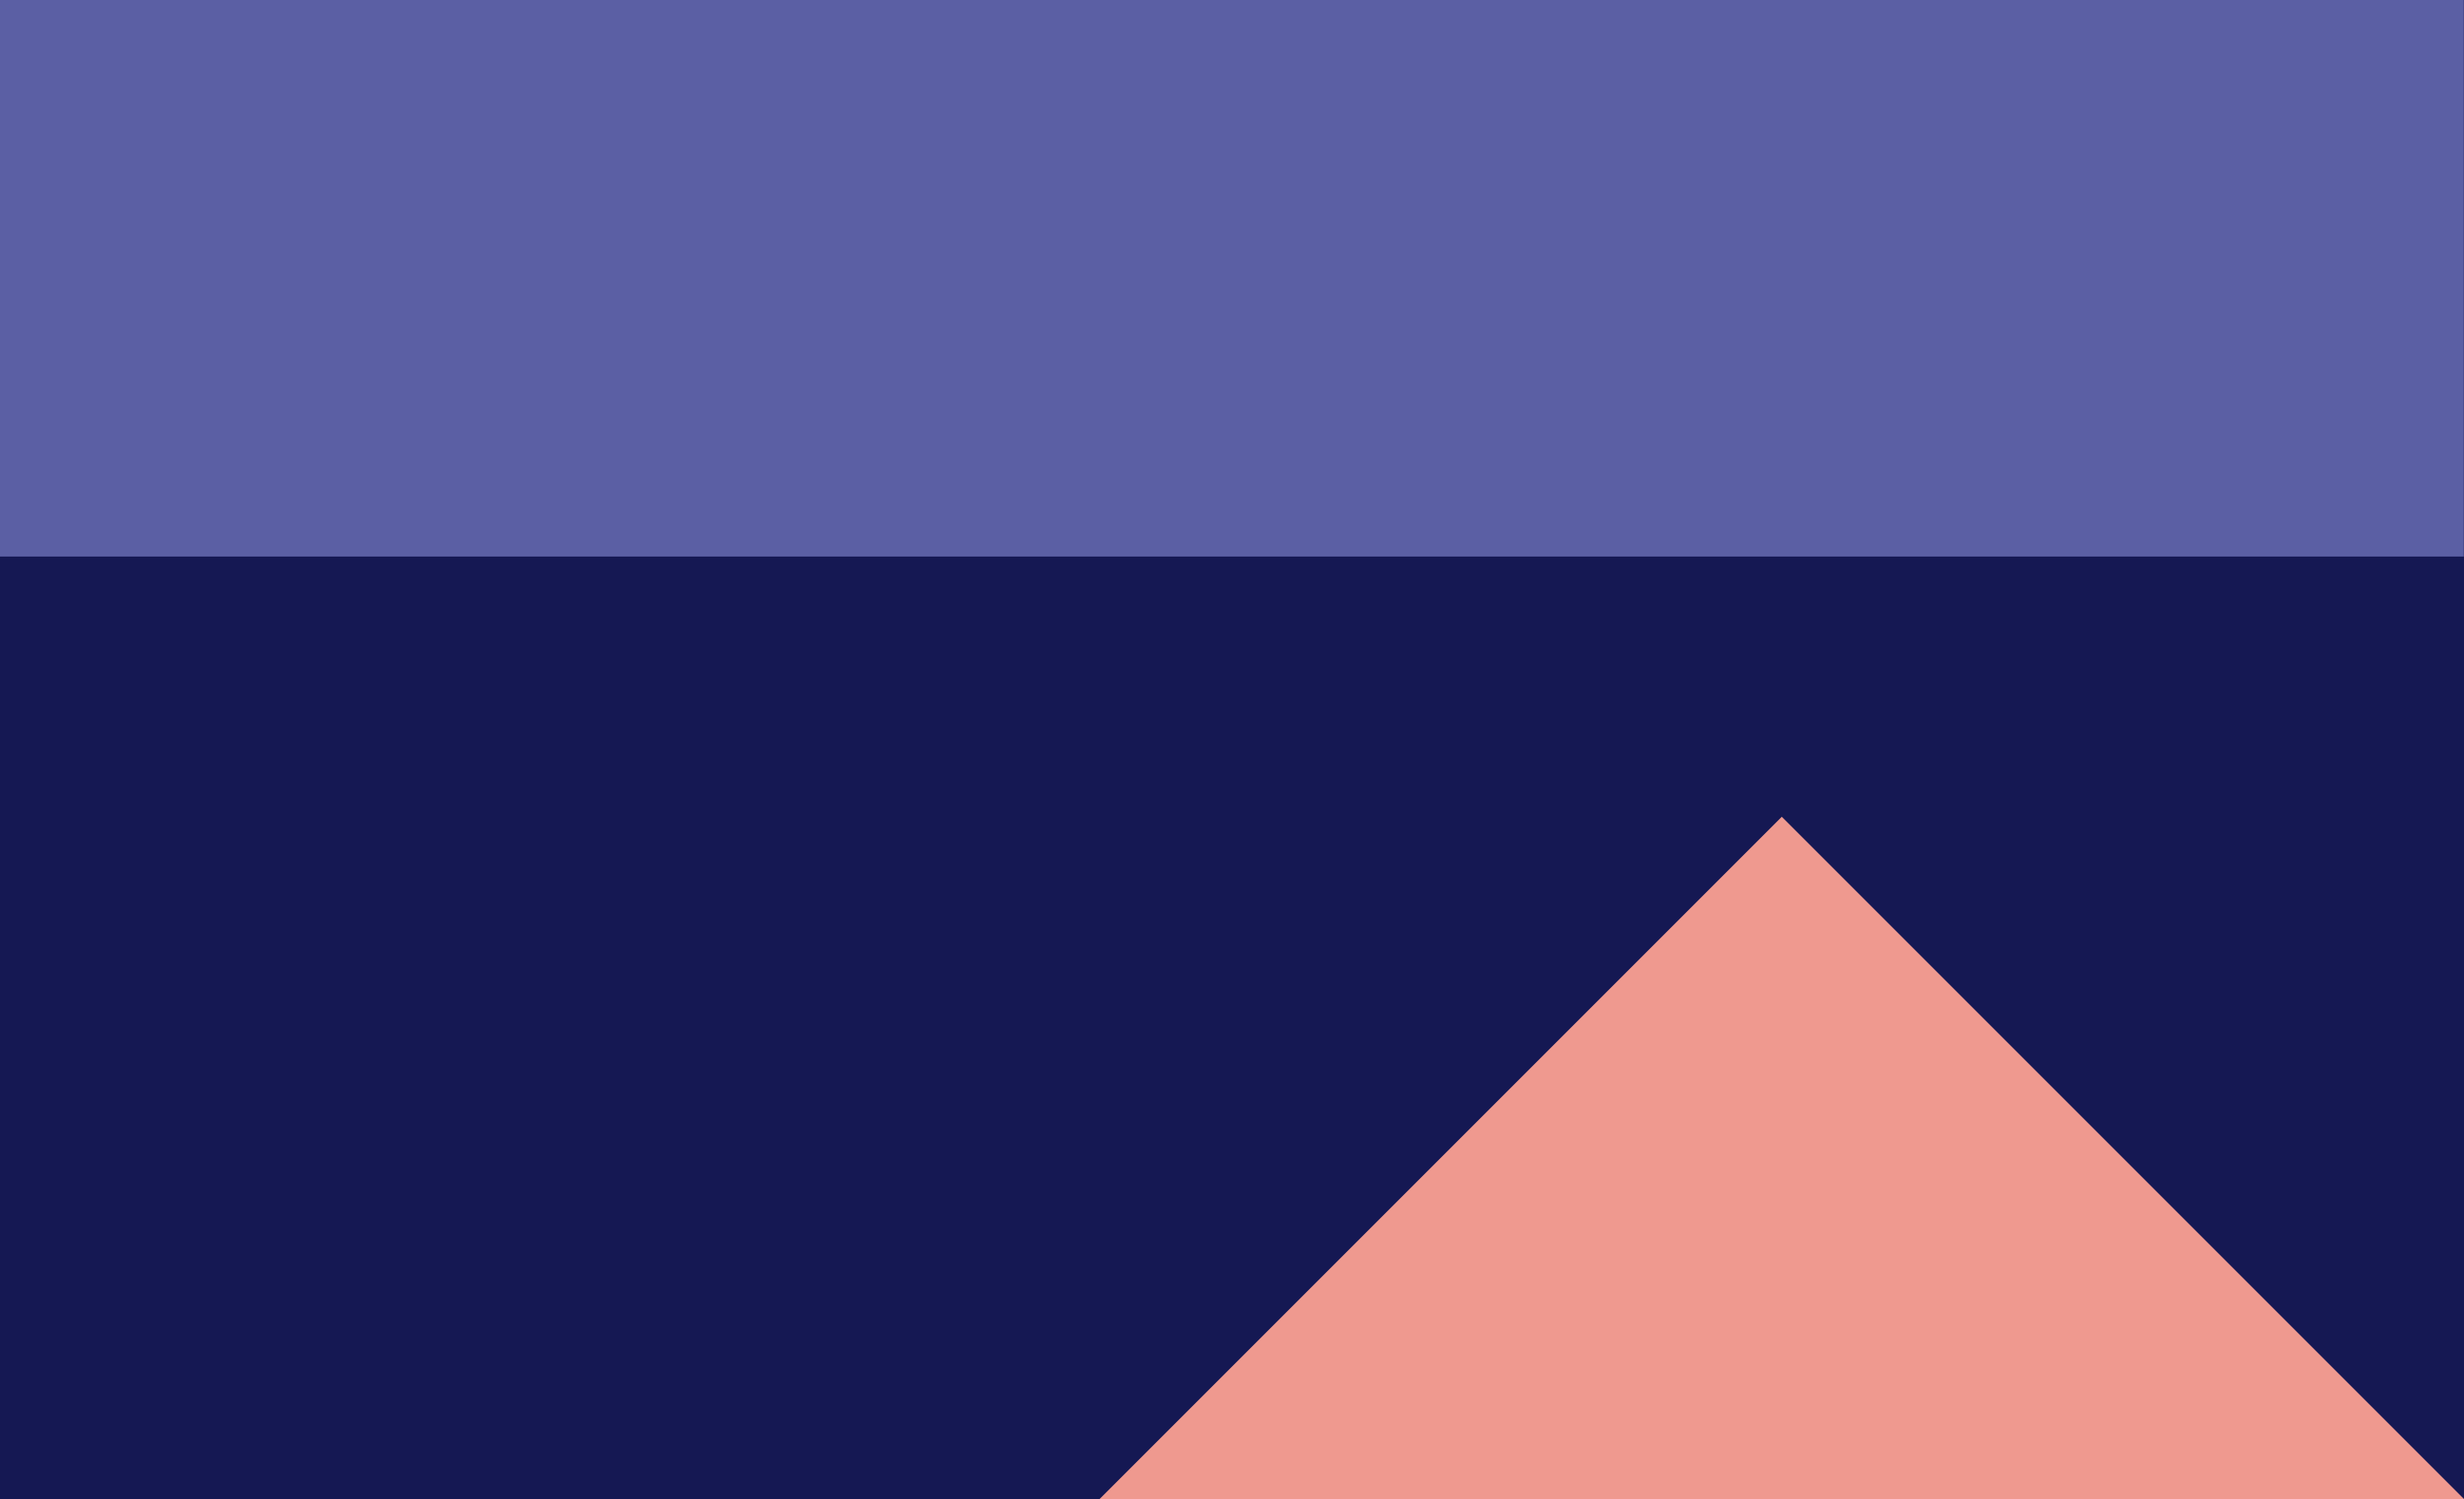 Orange triangle in purple background